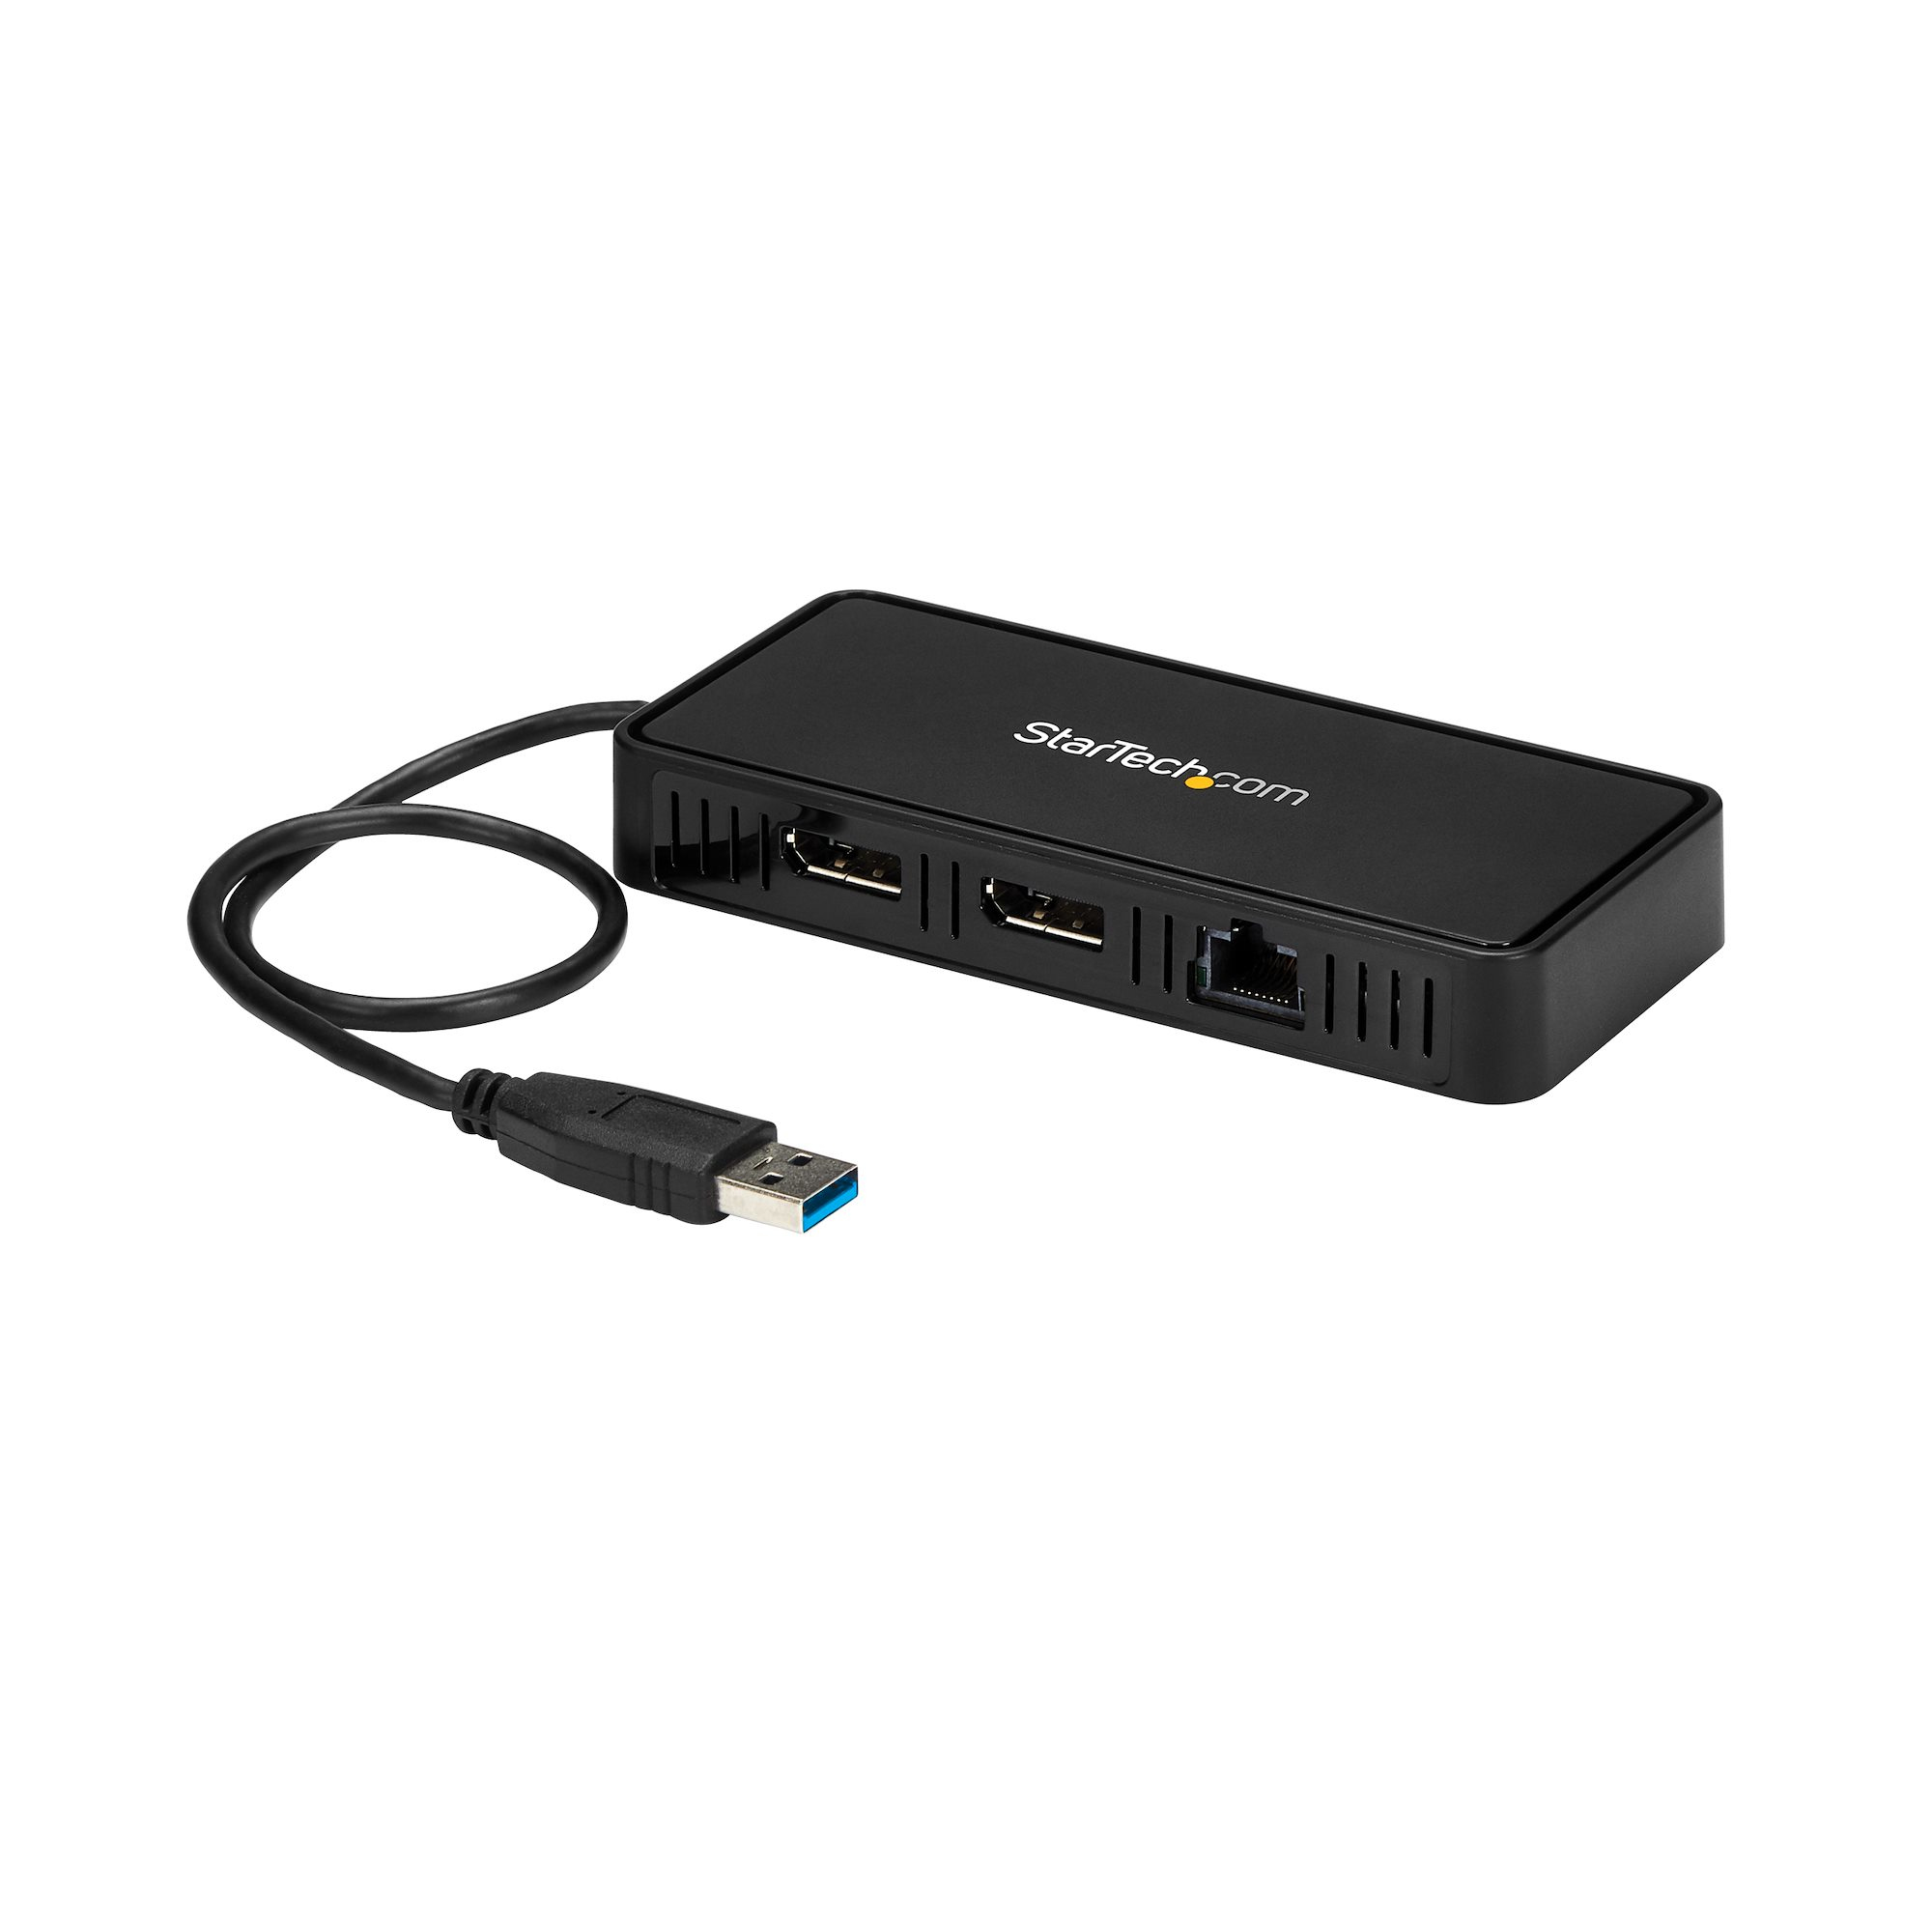 StarTech Mini USBA2DPGB | USB-A